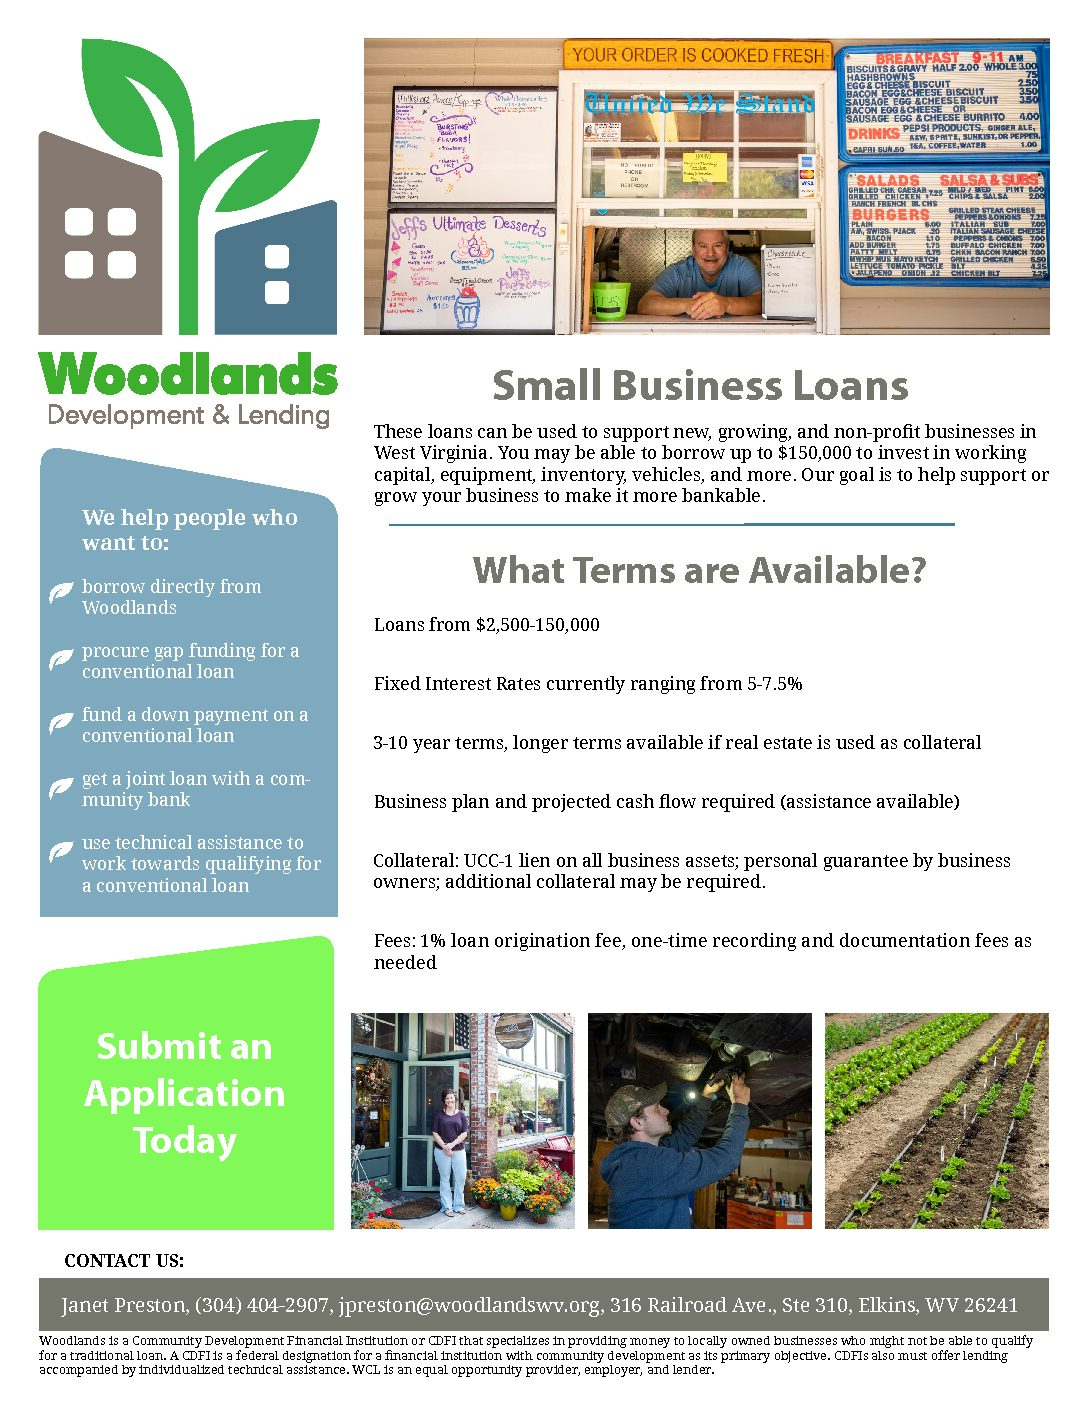 Small Business Loans sheet